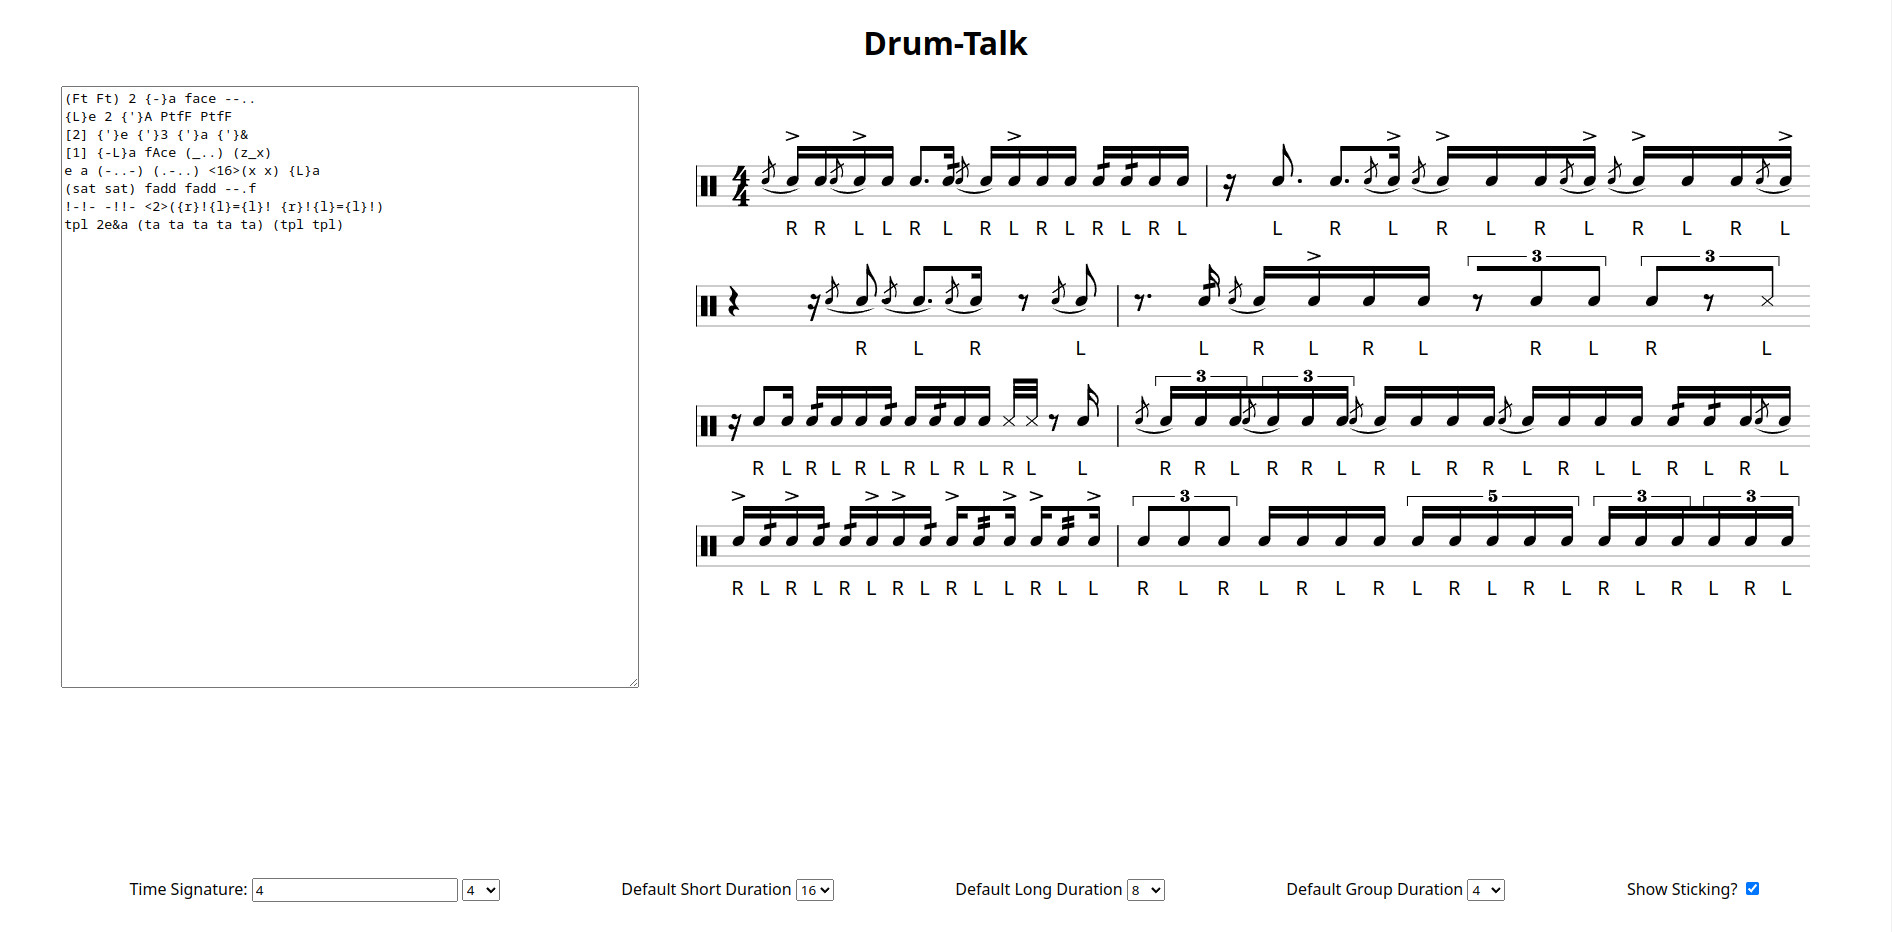 Drum-Talk webpage